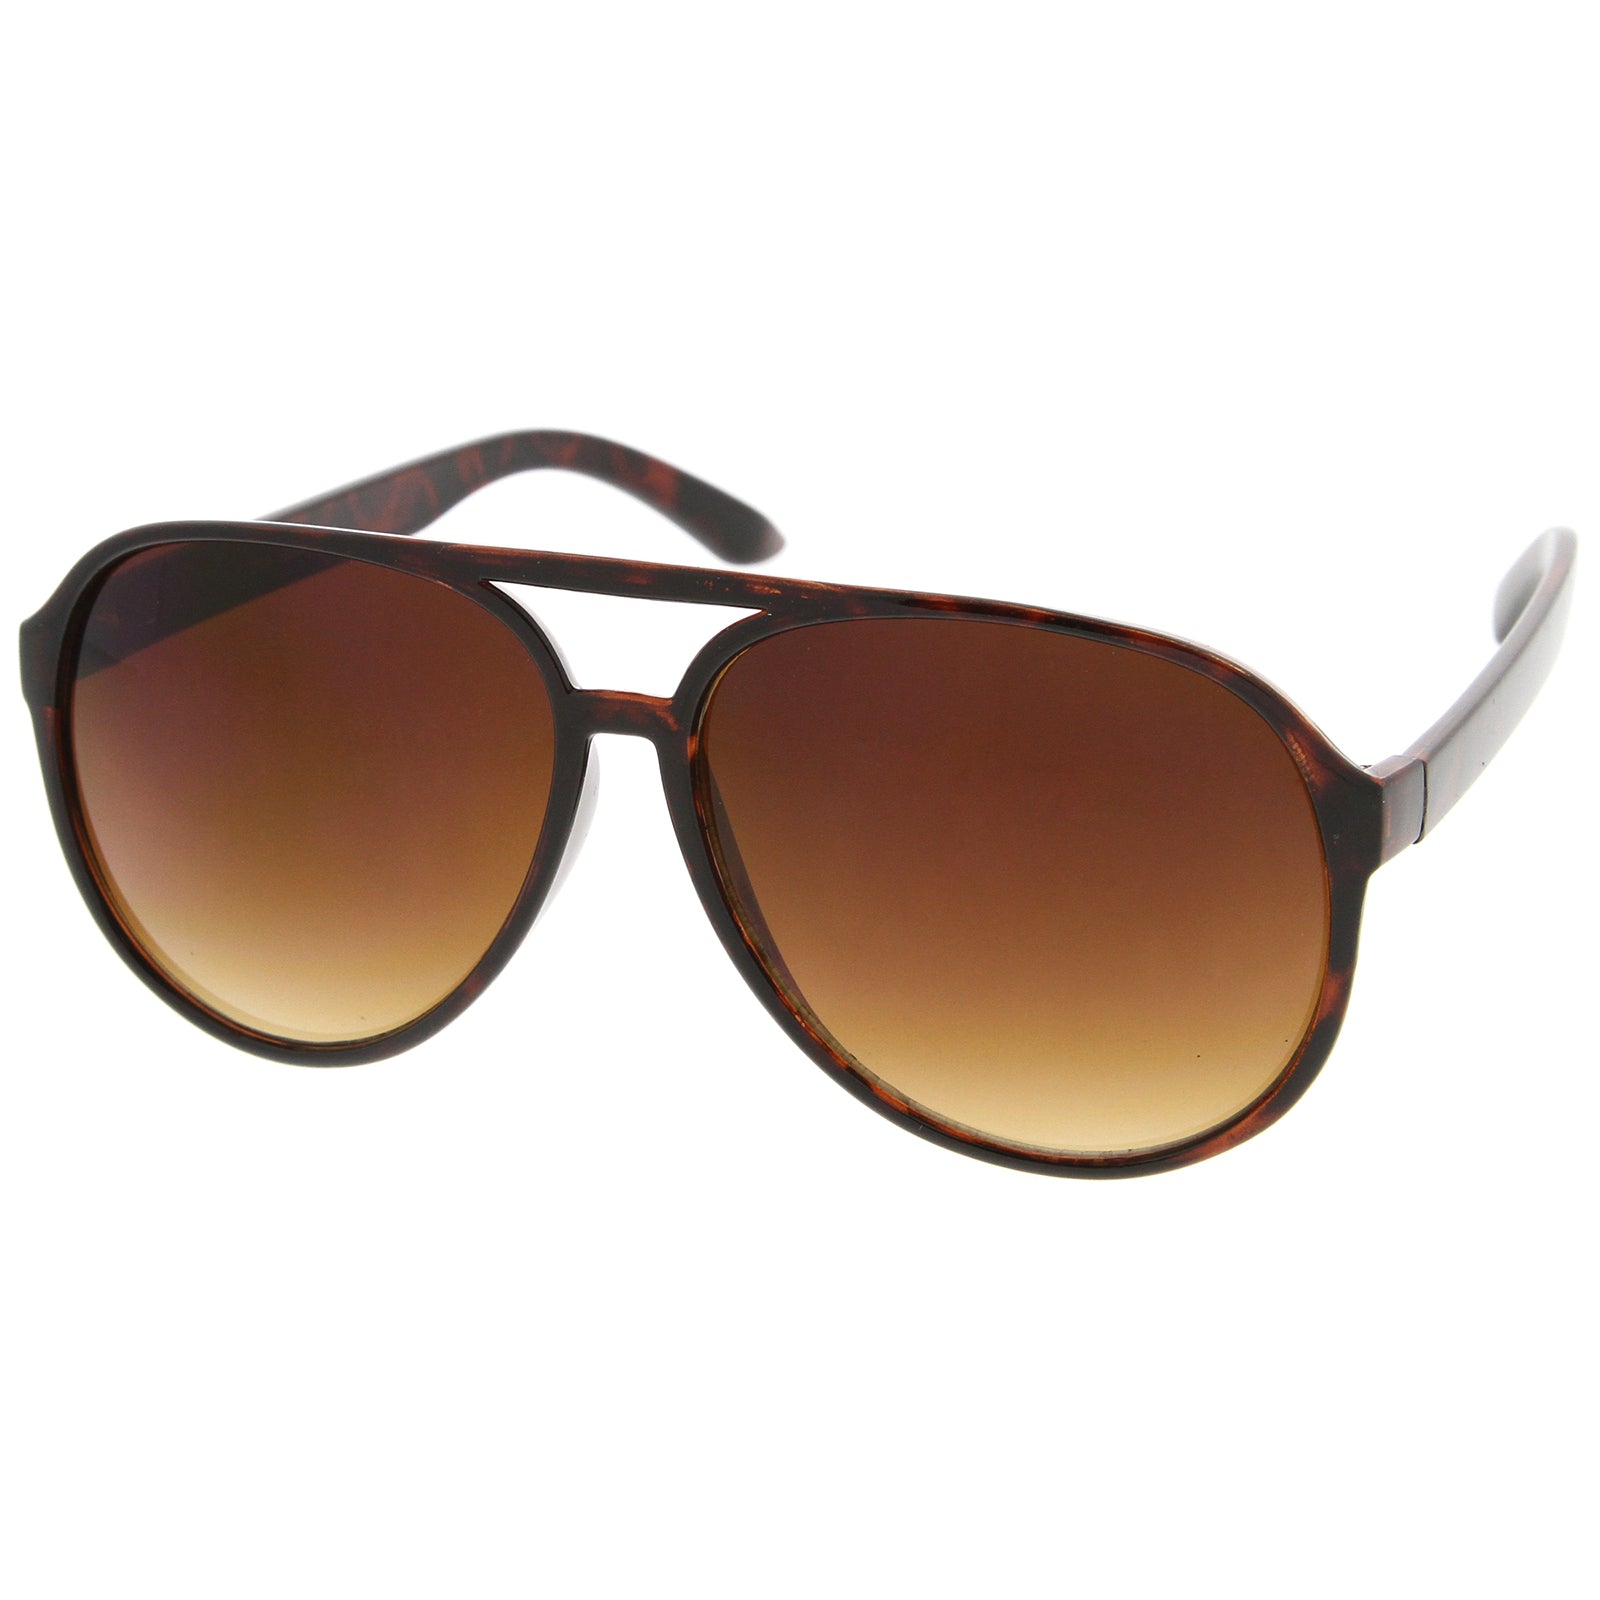 Titan Brown Gradient Aviator Sunglasses S15C3424 @ ₹3679